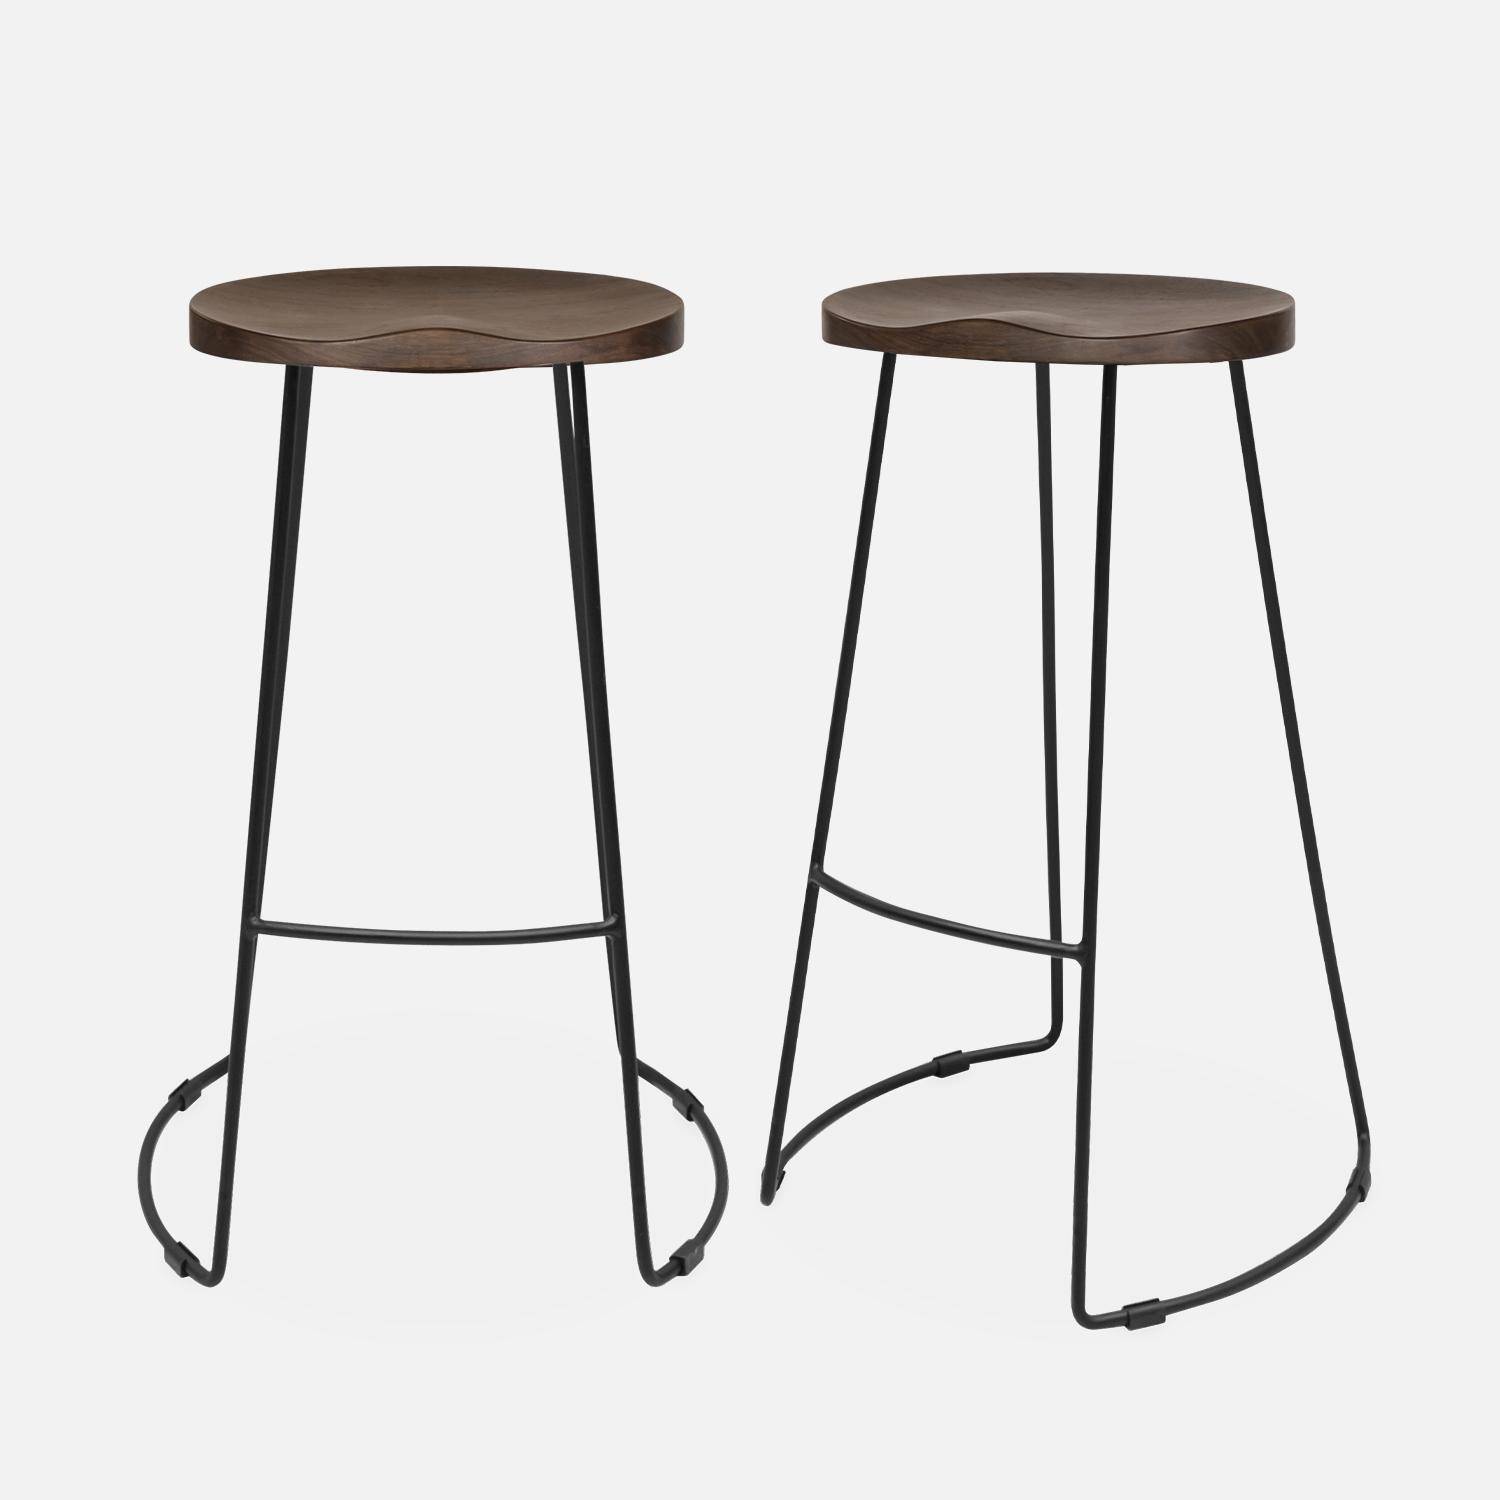 Pair of industrial metal and wooden bar stools, 47x40x75cm, Jaya, Light Walnut, Mango wood seat, black metal legs,sweeek,Photo3